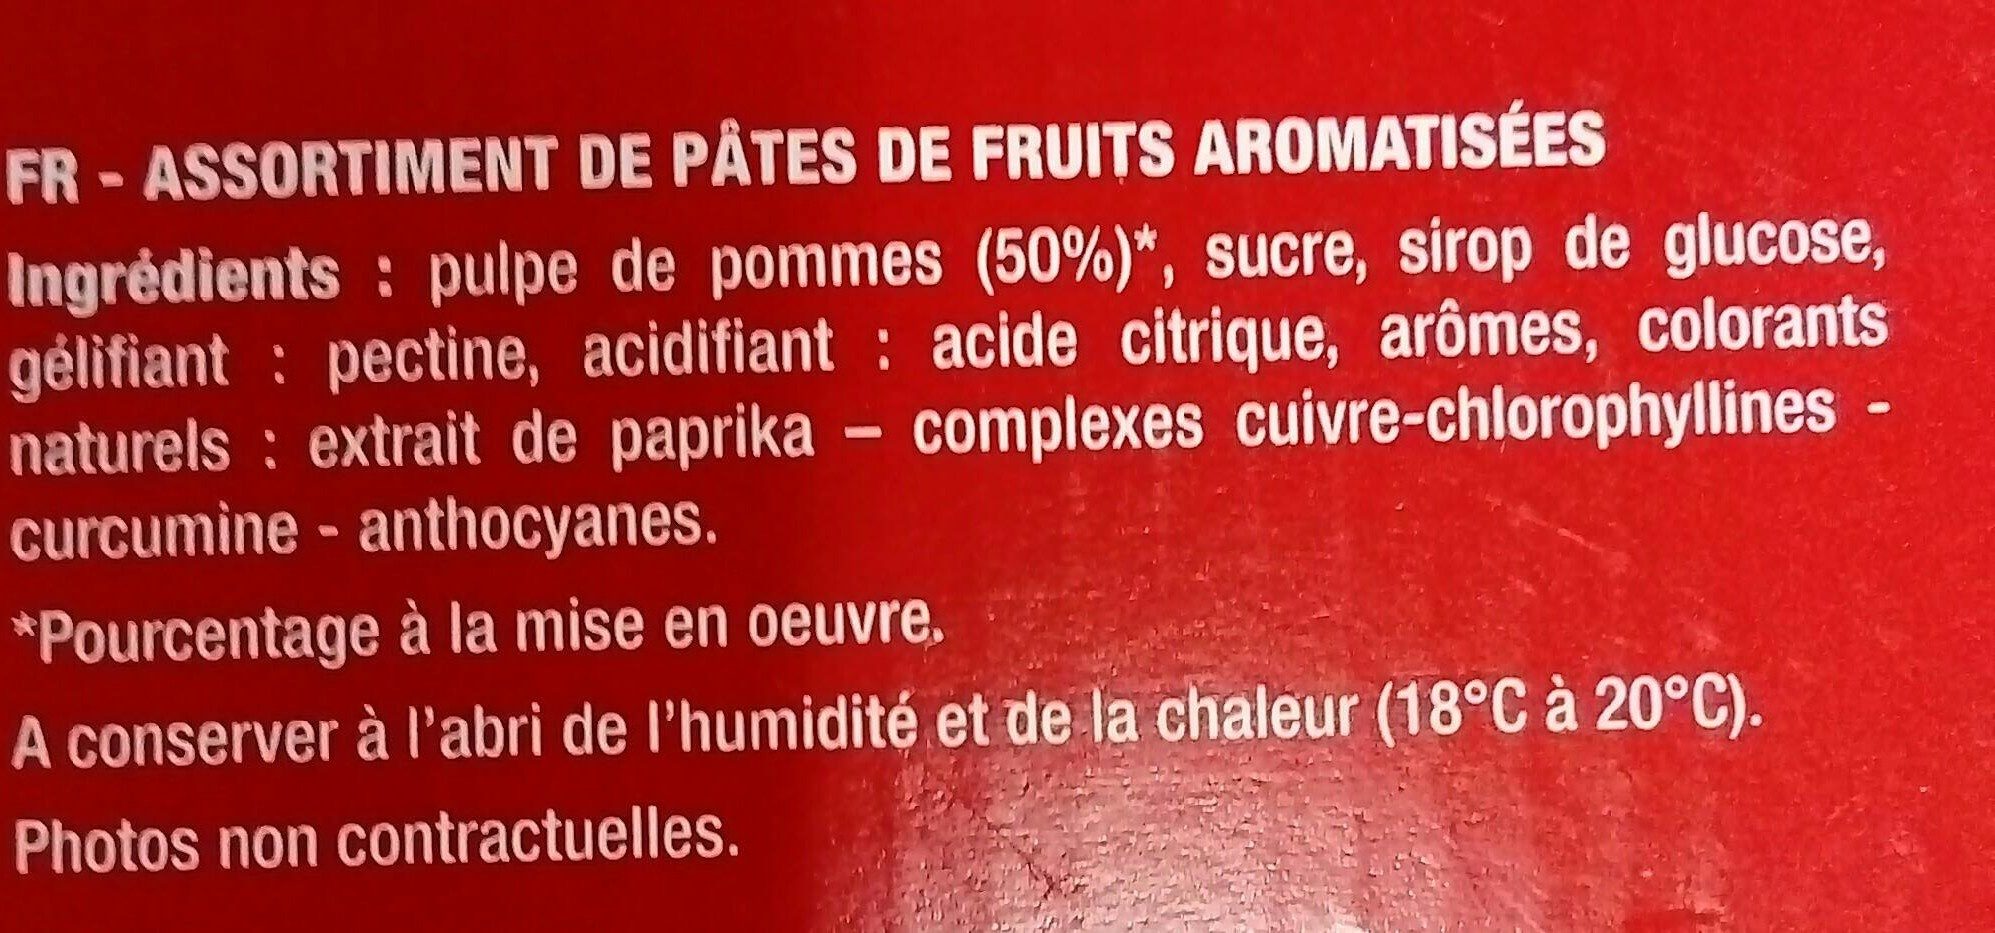 Bâtonnets pâtes de fruits - Ingredienser - fr